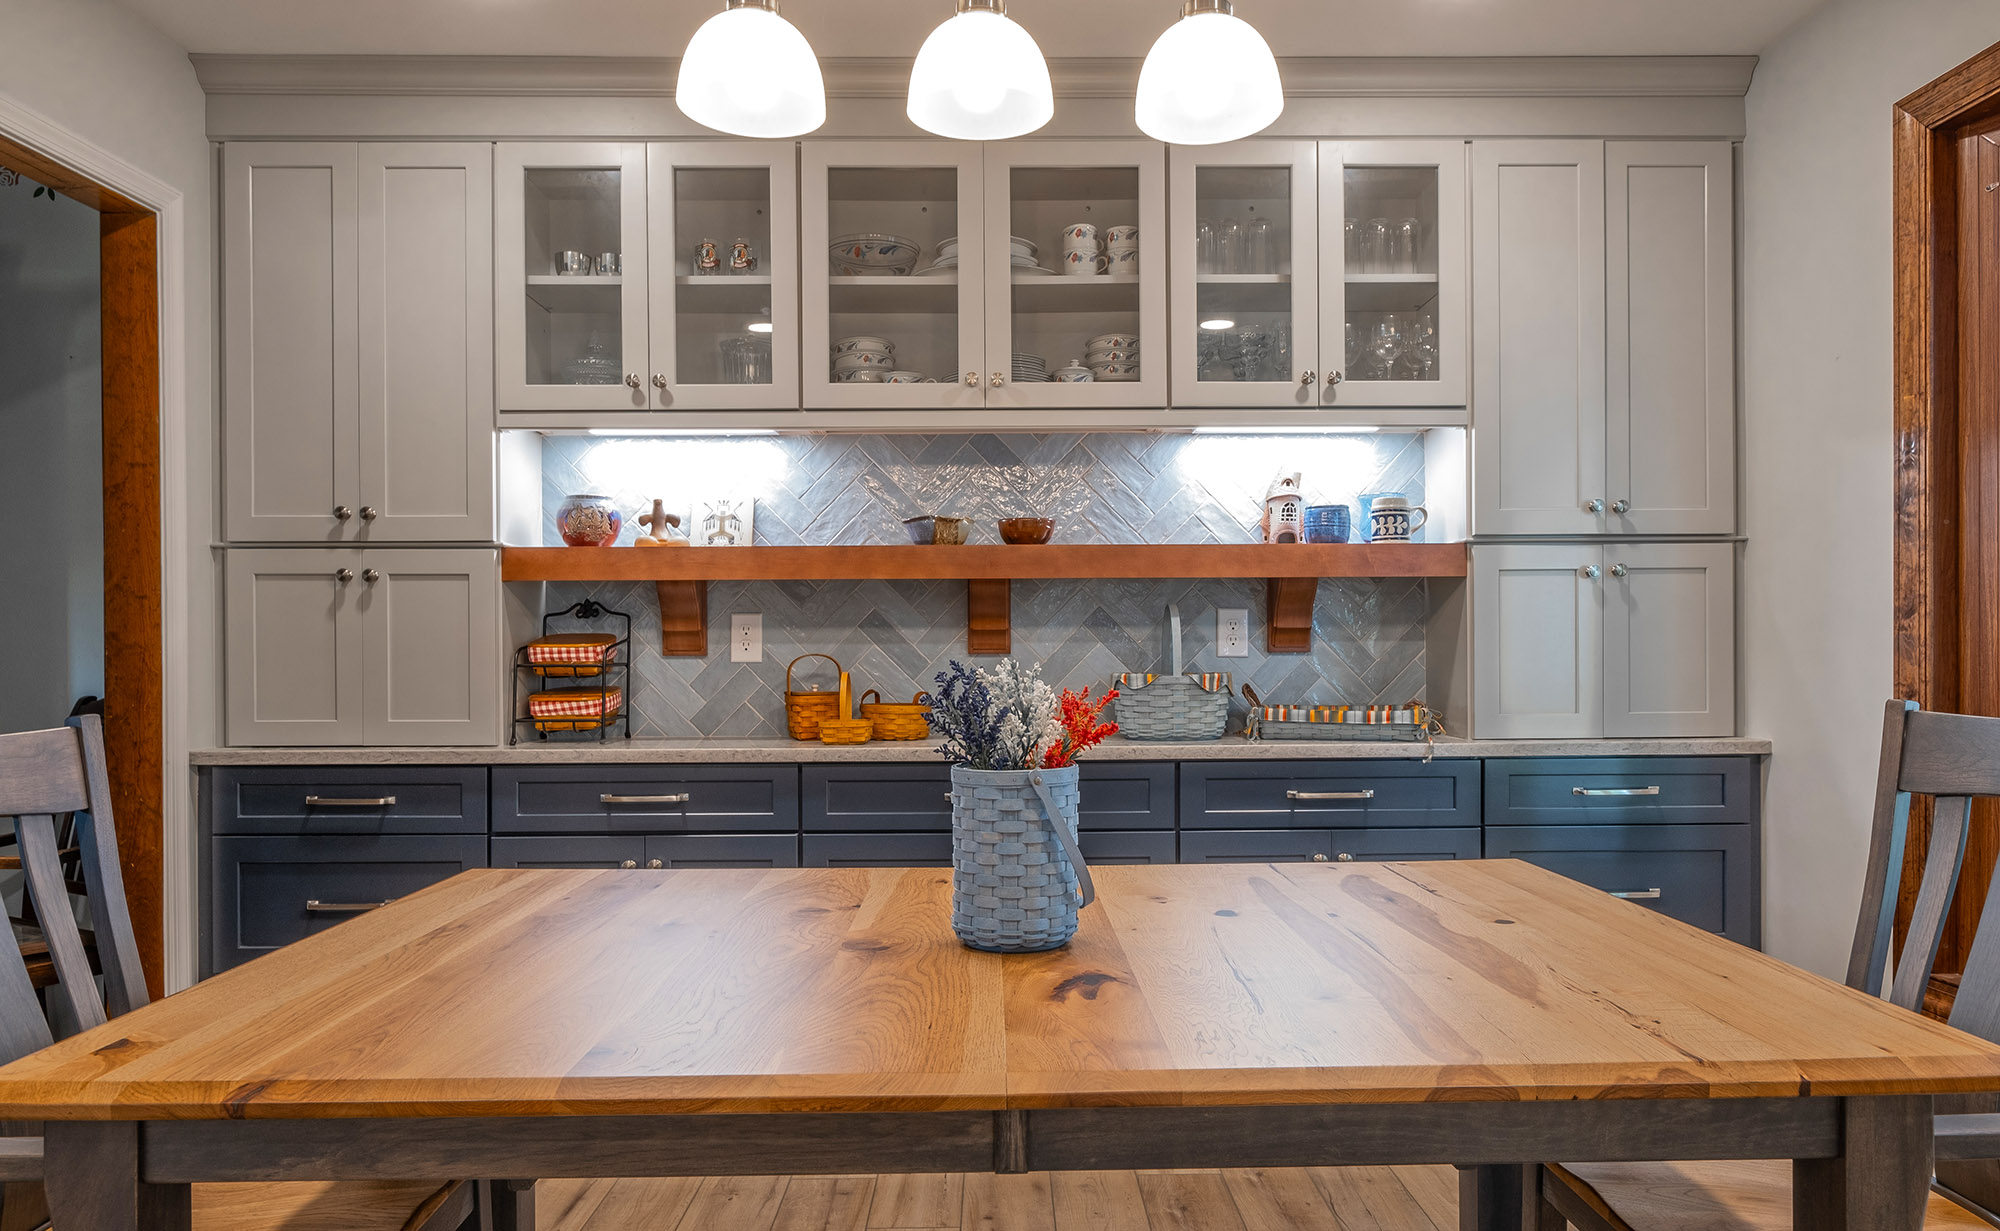 Eat-in kitchen area with built in cabinets, tiled backsplash and floating shelf.